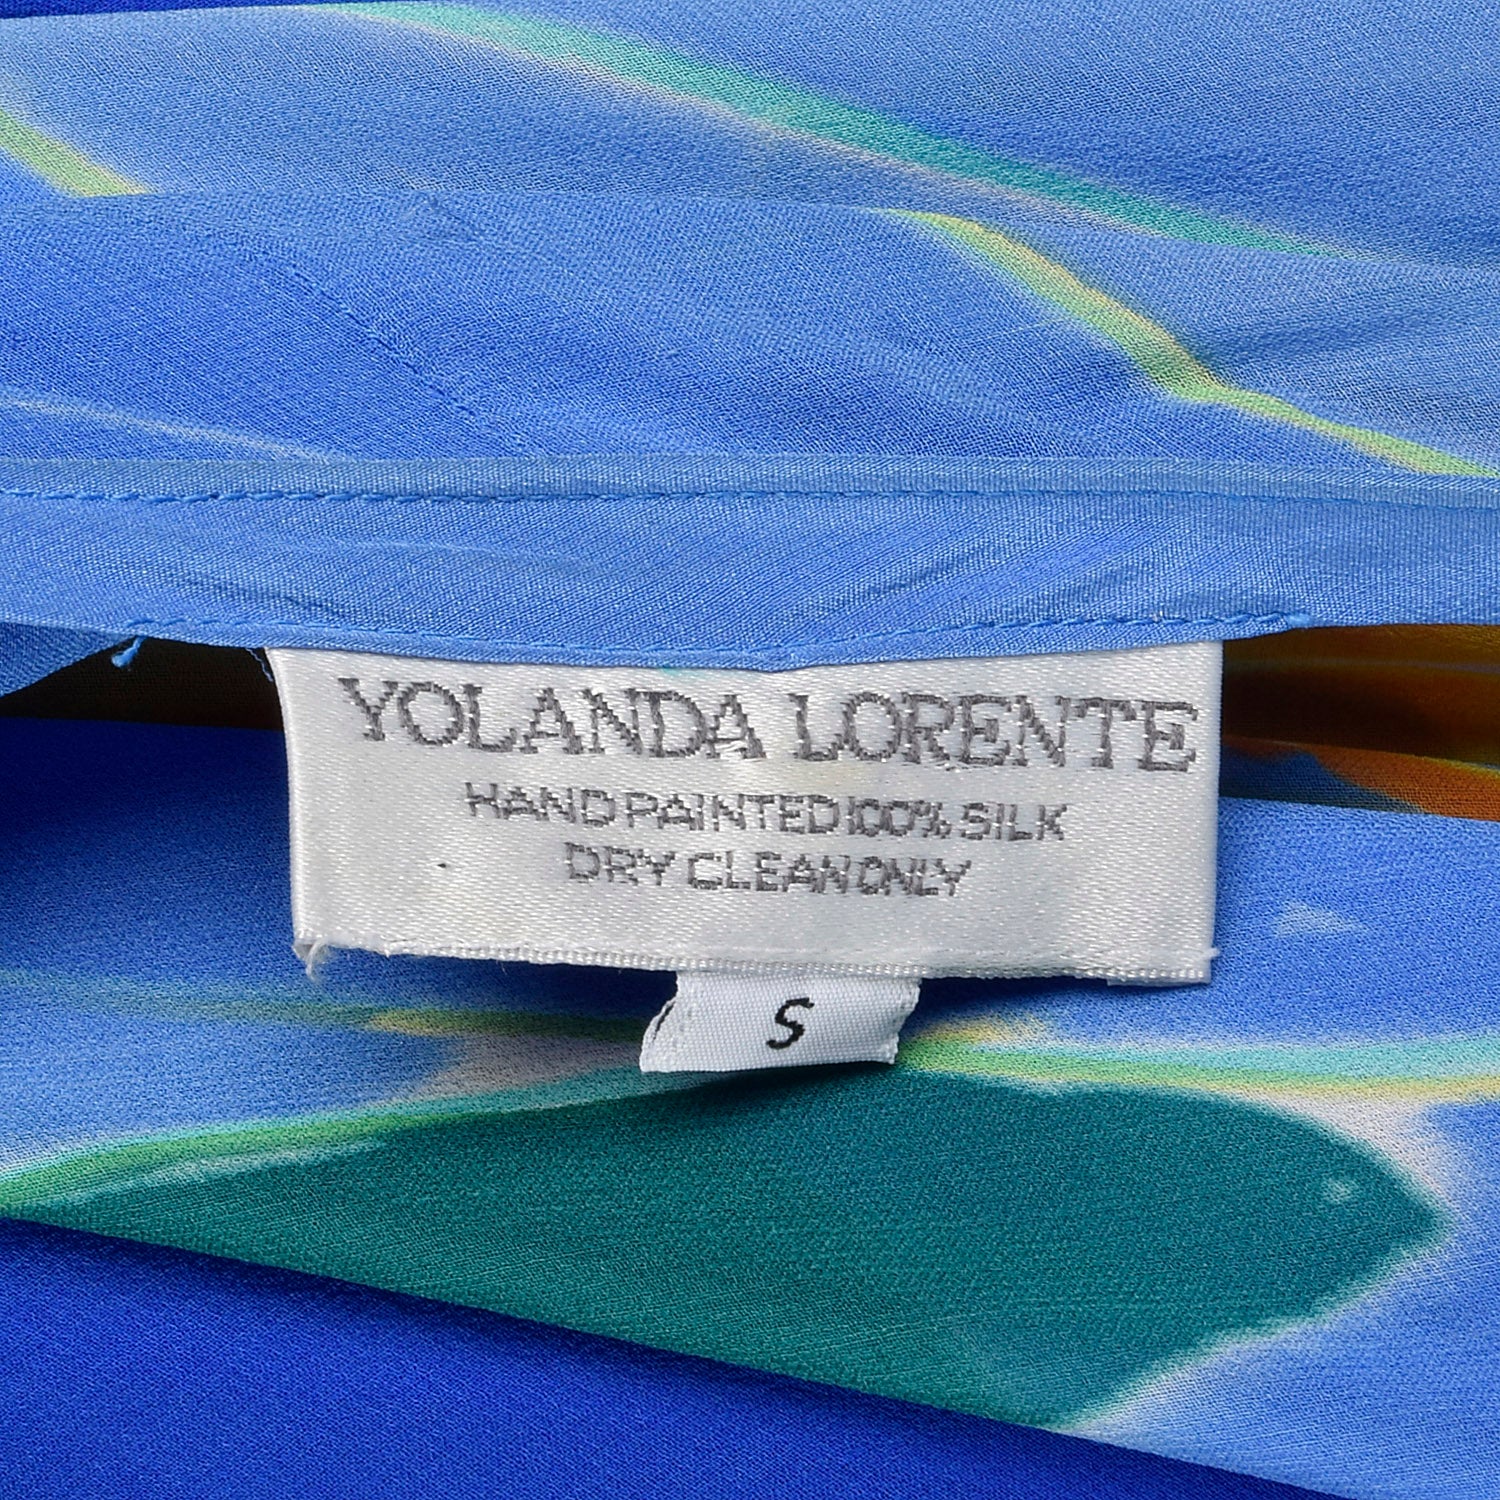 1980s Yolanda Lorenta Hand Painted Silk 3 Piece Set